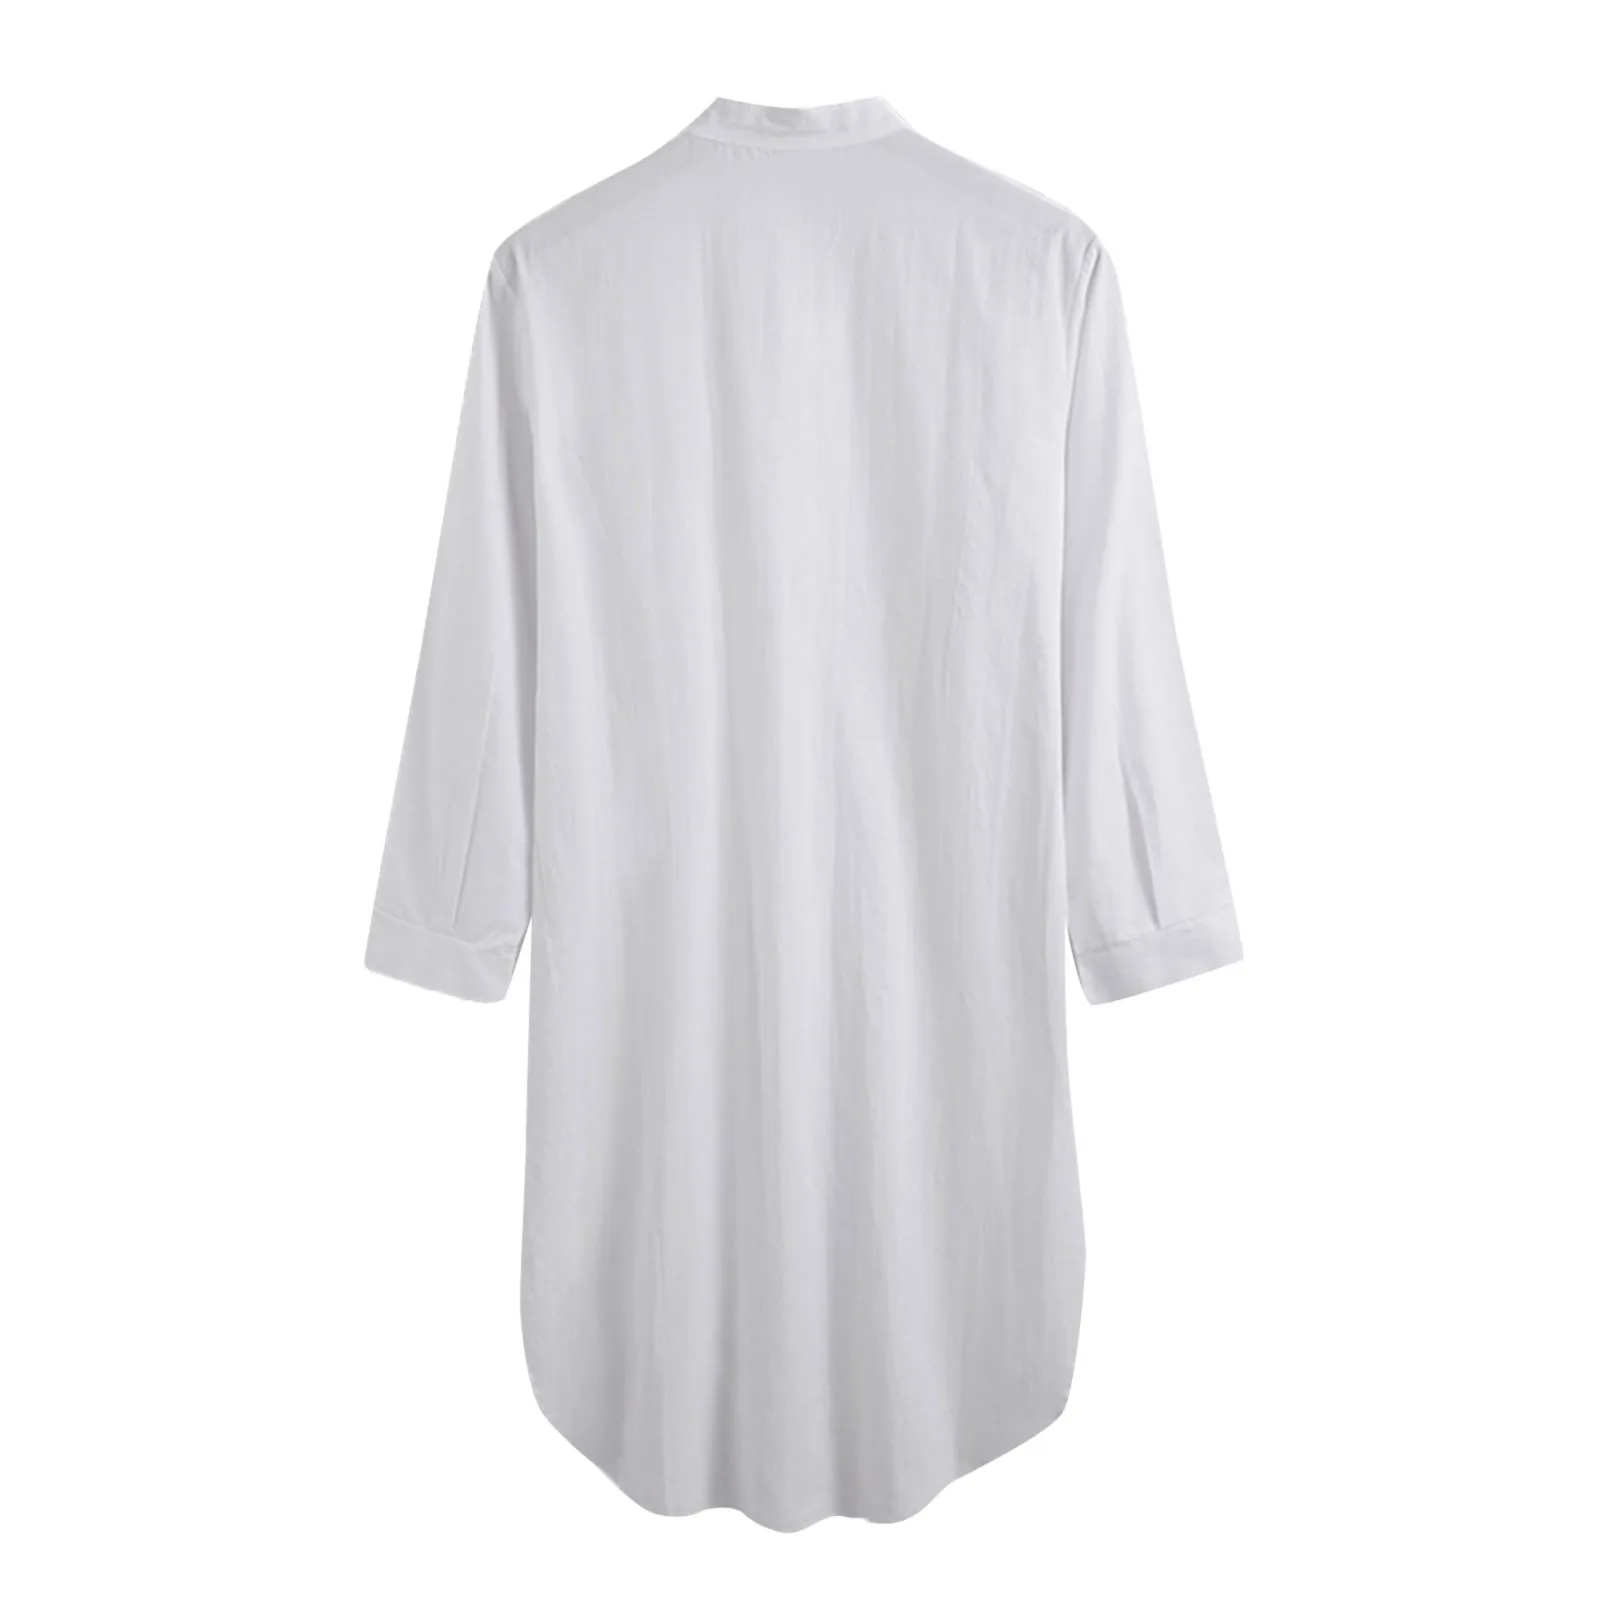 Men's Long-Sleeved Button-Down Sleepwear Solid Color Printed Shirt Stylish Nightgown Nightwear Loose Soft Long Shirt Homewear plus size silk pajamas